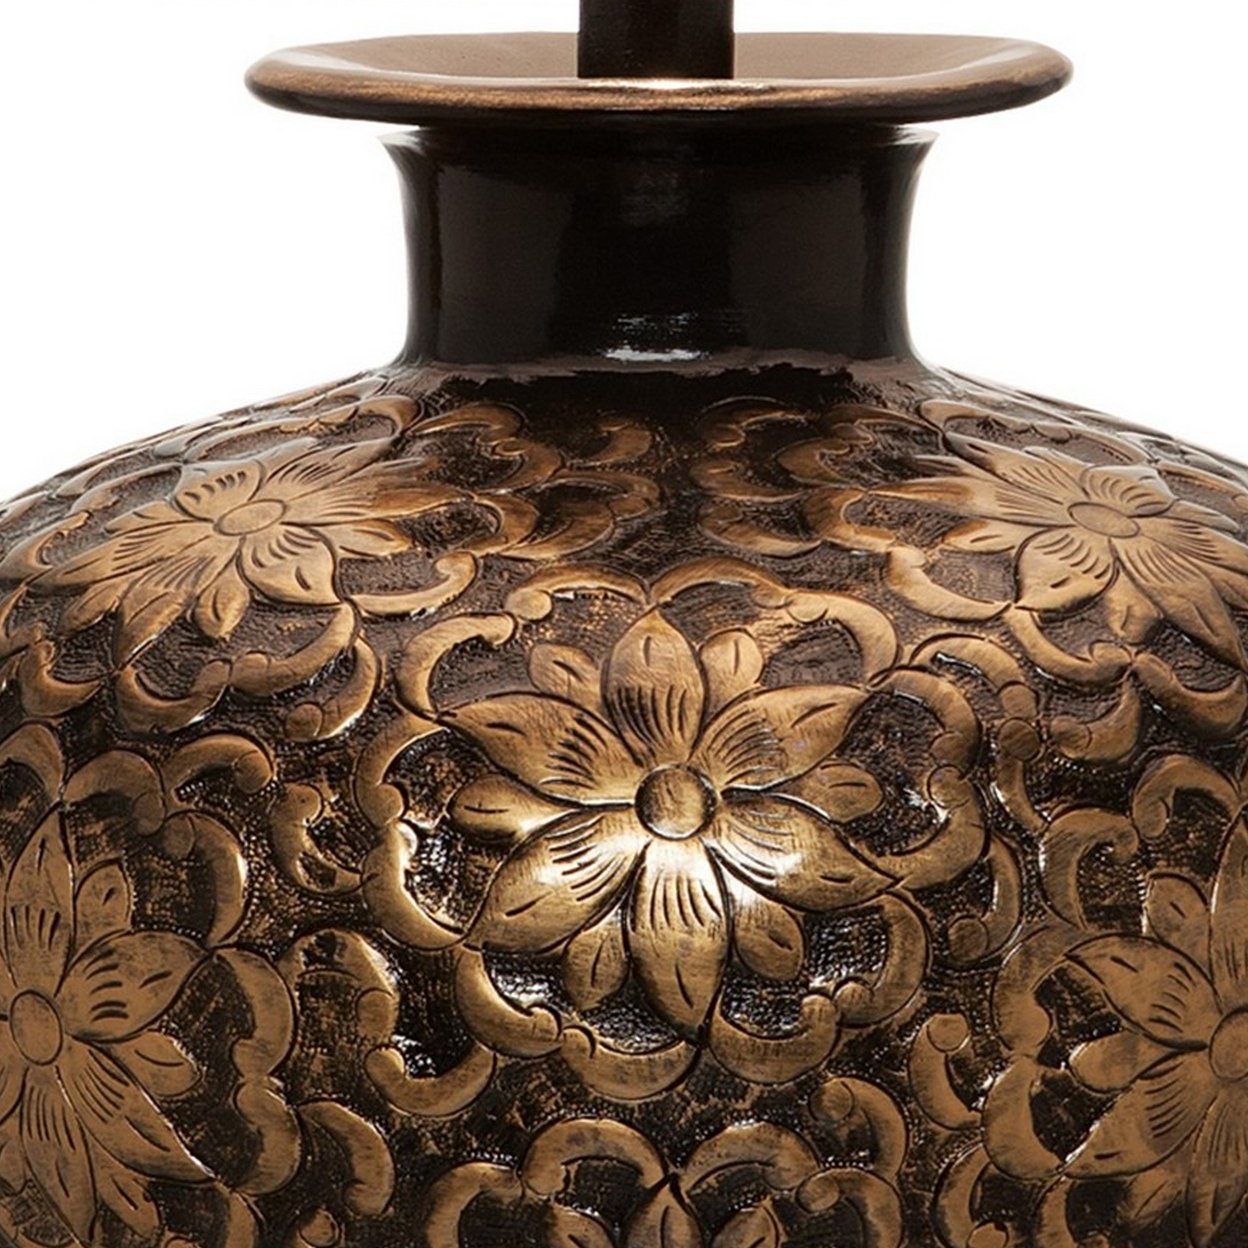 Neji 26 Inch Table Lamp, Curved Pot Design Base, Floral Pattern, Gold- Saltoro Sherpi